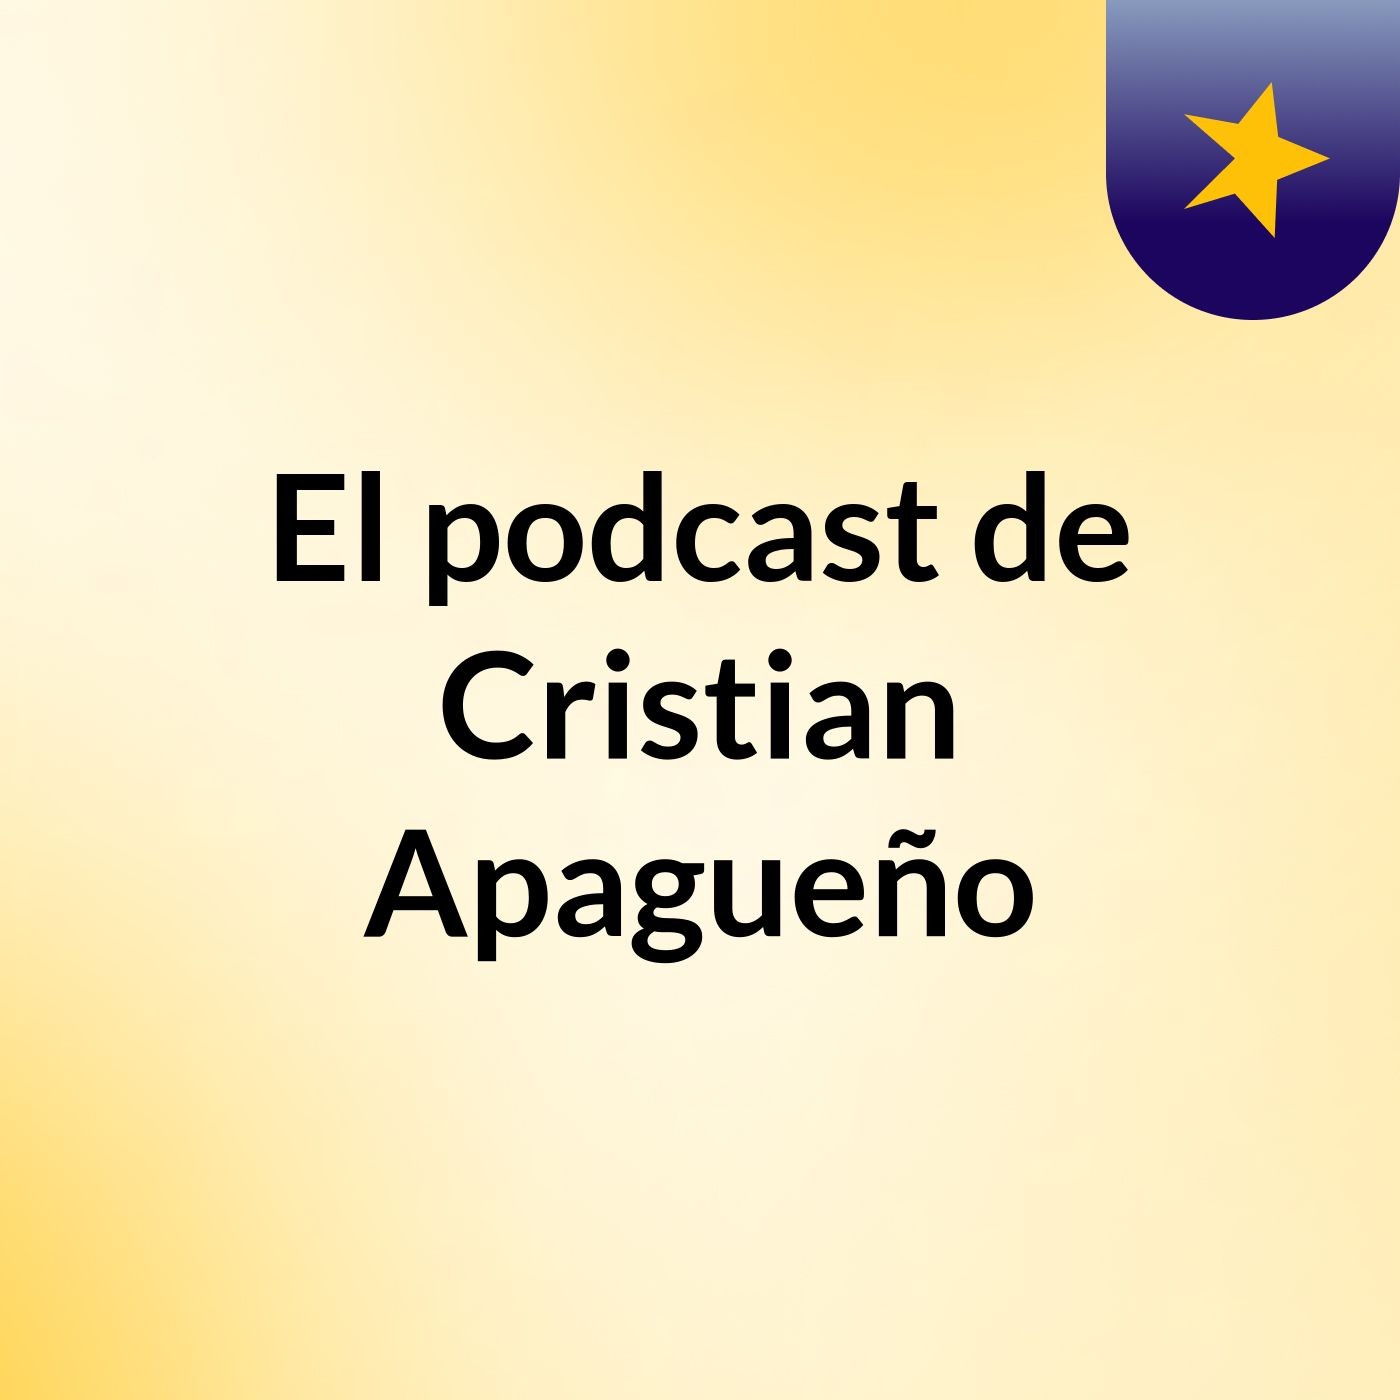 Episodio 5 El podcast de Cristian Apagueño